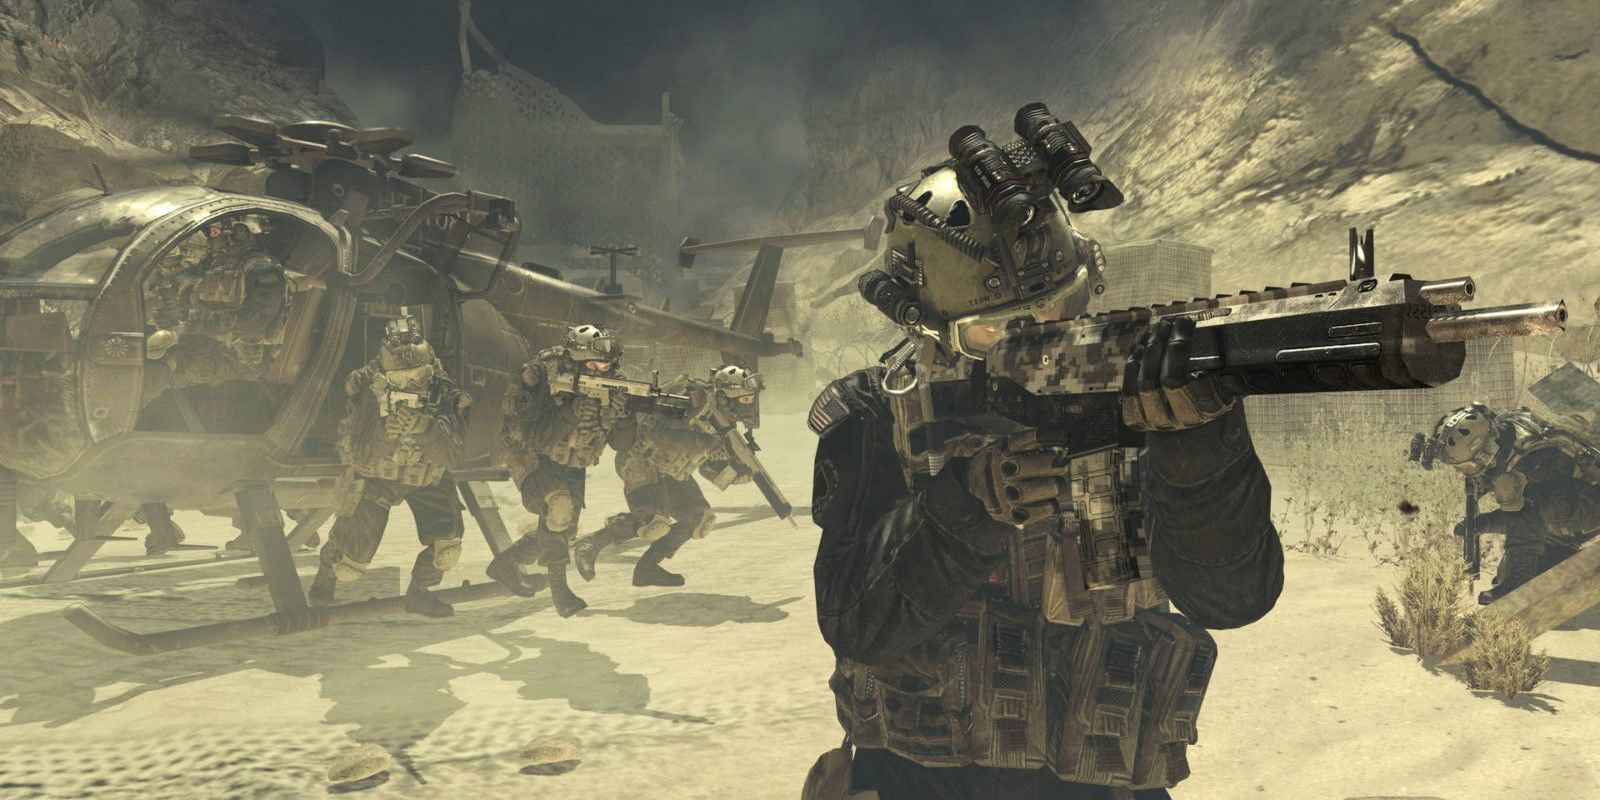 Call Of Duty Pro Seany Ingin Senjata Mw2 Ini Kembali Dalam Perang Modern, Mengungkapkan Senjata yang Terabaikan